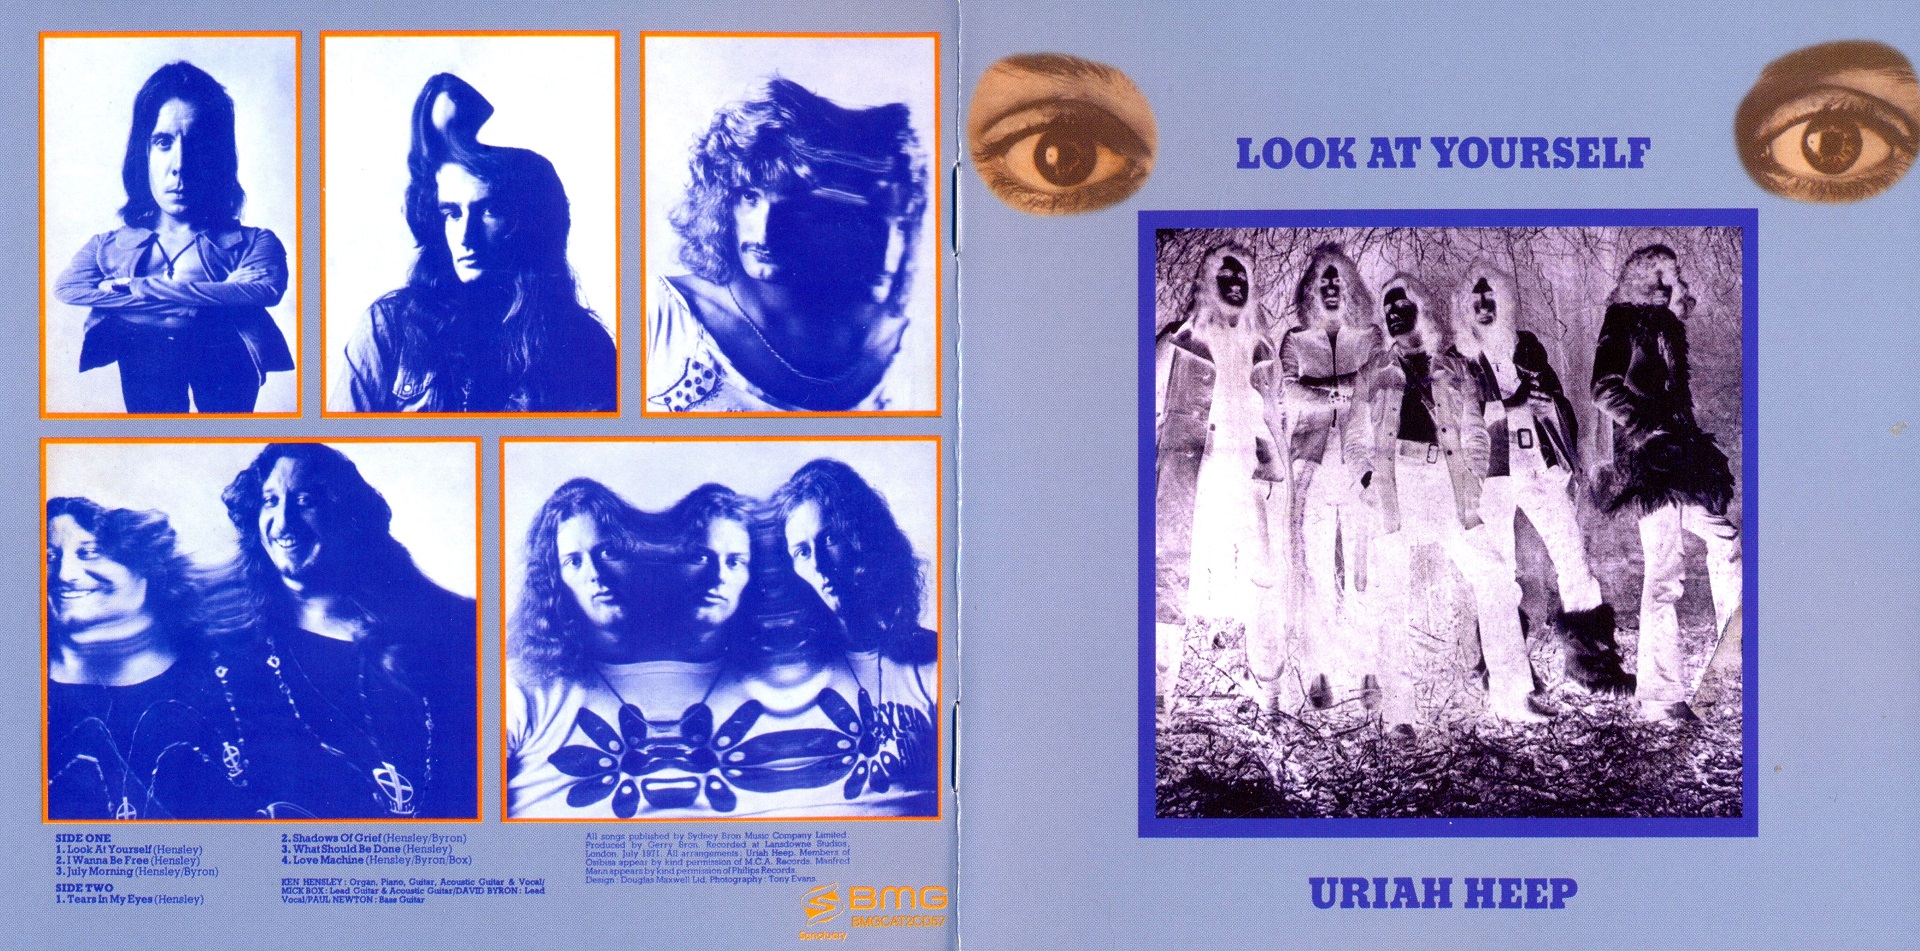 Uriah Heep - Look At Yourself 1971 Remaster 2017 CD1 - Original LP Remastered